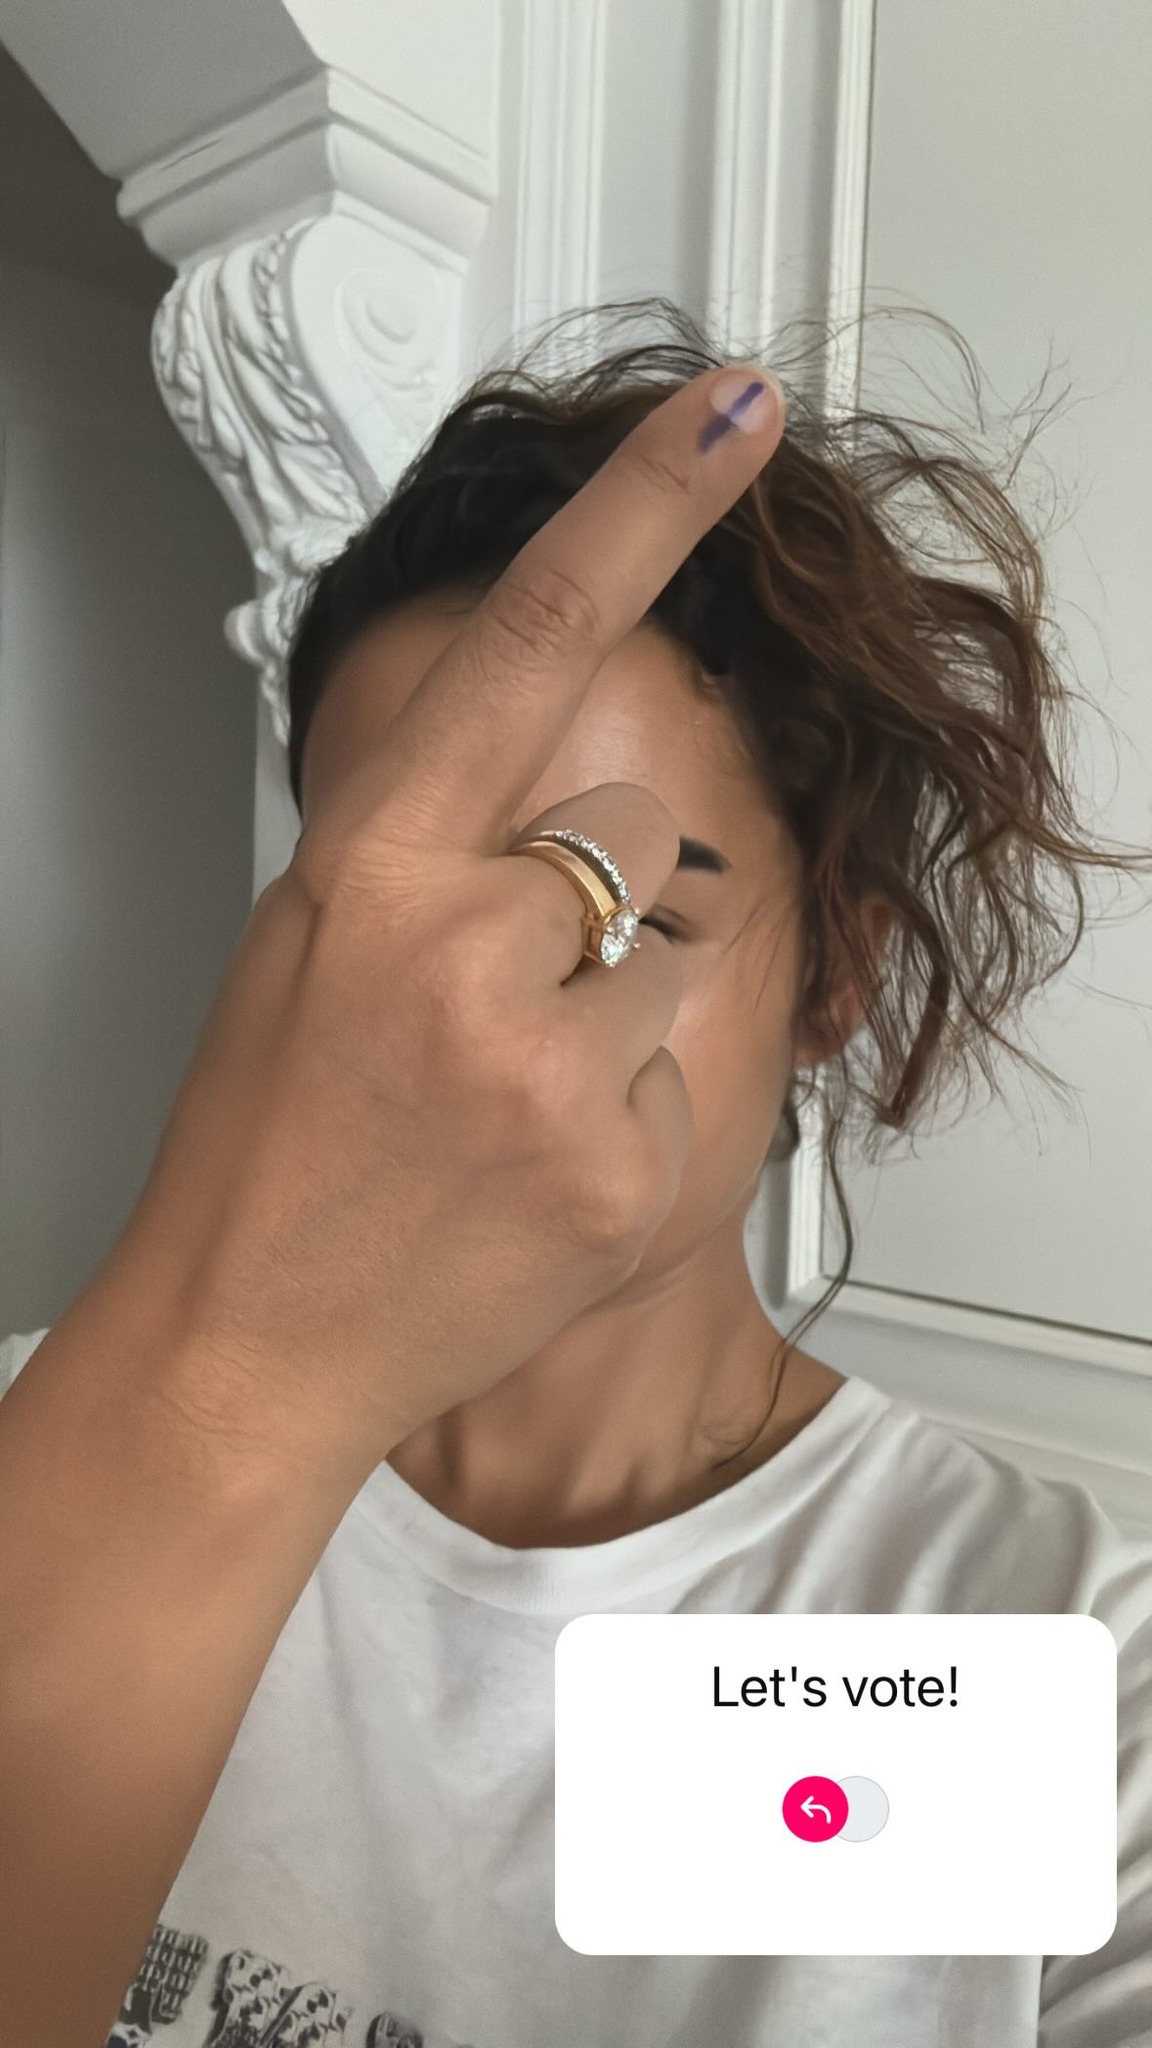 Pratralekhaa flaunts her inked finger